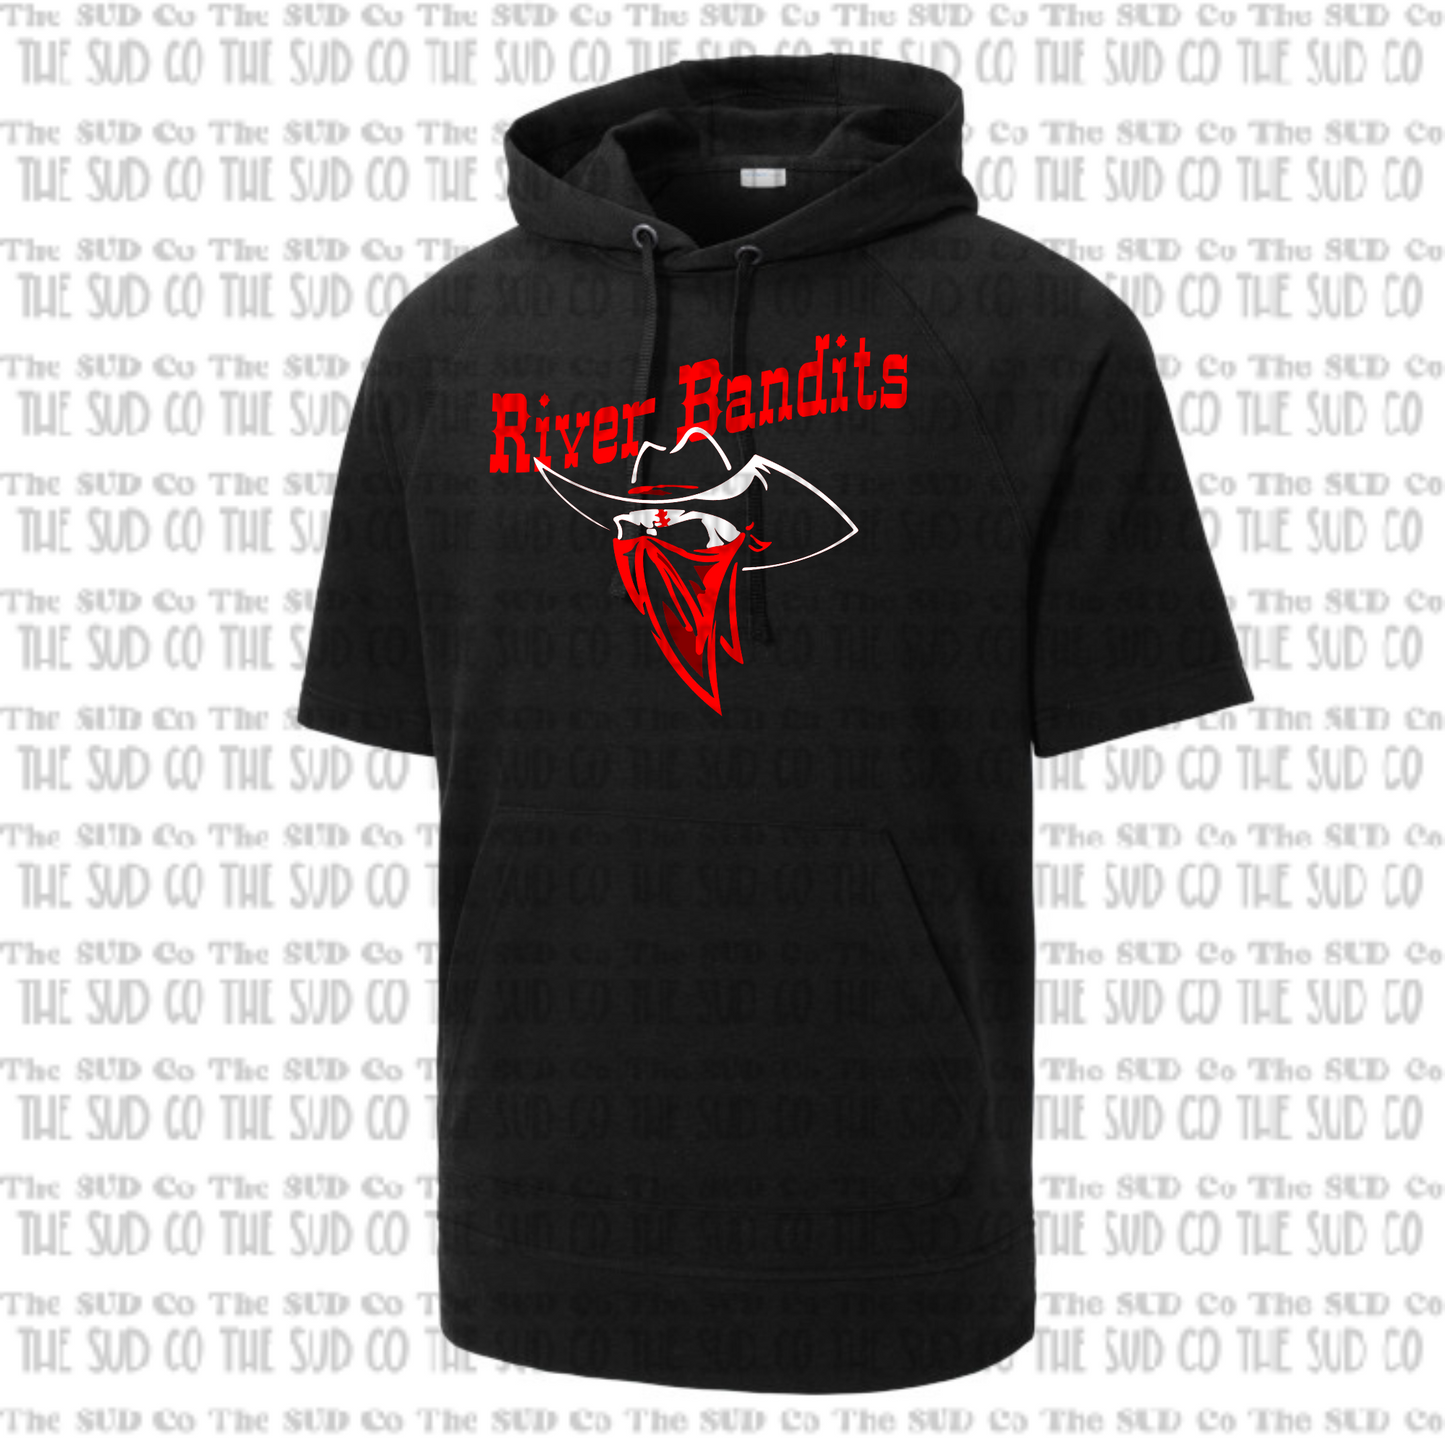 River Bandits Hooded Short Sleeve Sweatshirt - Black